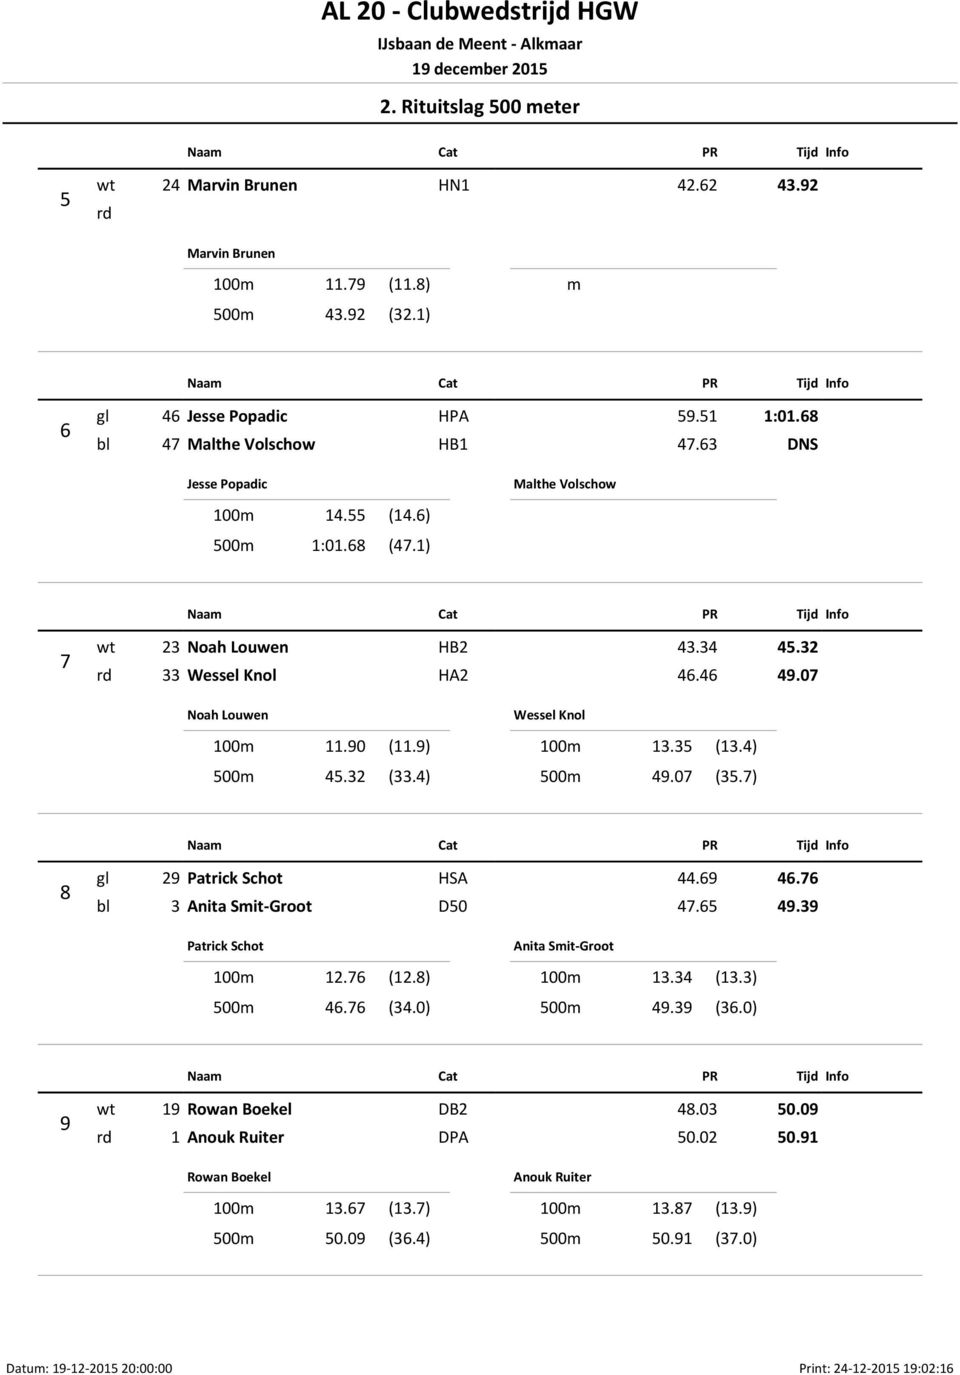 4) Wessel Knol 100m 13.35 (13.4) 500m 49.07 (35.7) 8 gl 29 Patrick Schot HSA 44.69 46.76 bl 3 Anita Smit-Groot D50 47.65 49.39 Patrick Schot 100m 12.76 (12.8) 500m 46.76 (34.